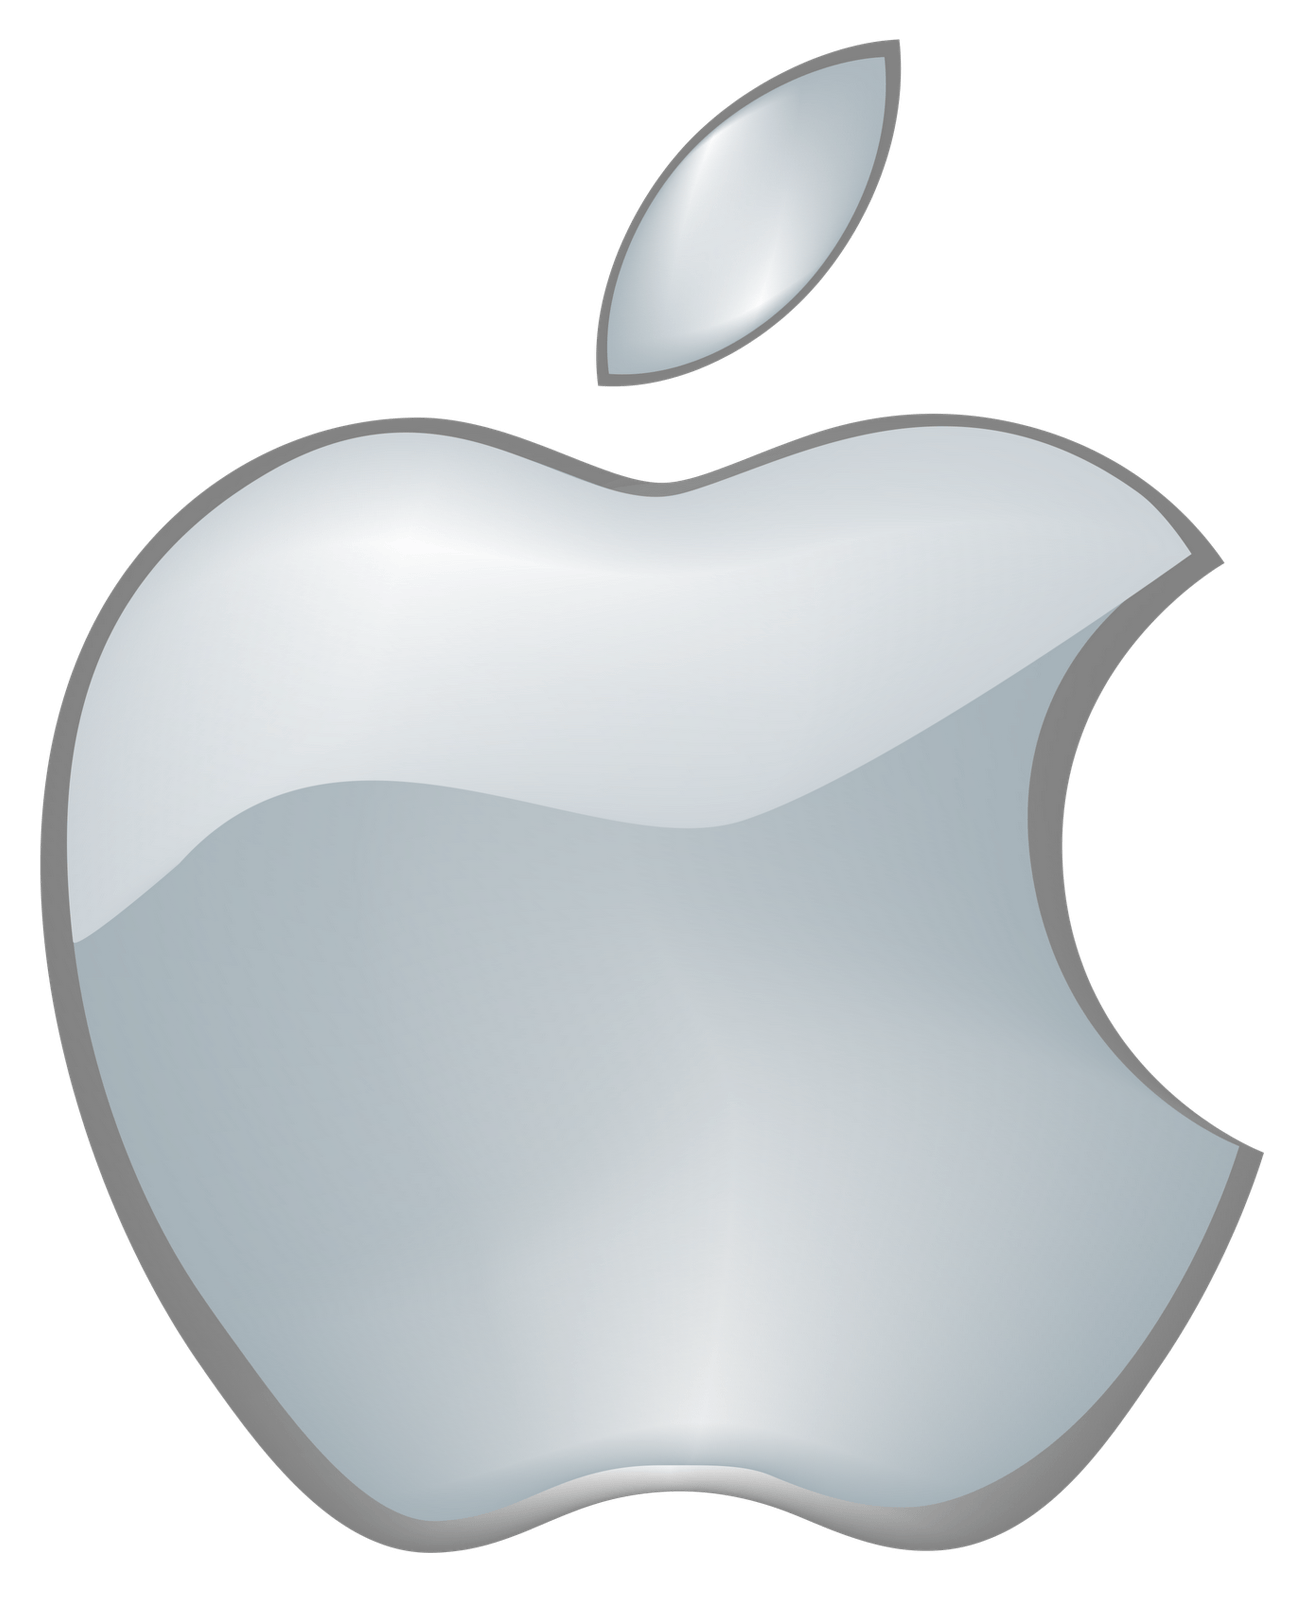 iPhone Apple Logo - Apple logo PNG image free download